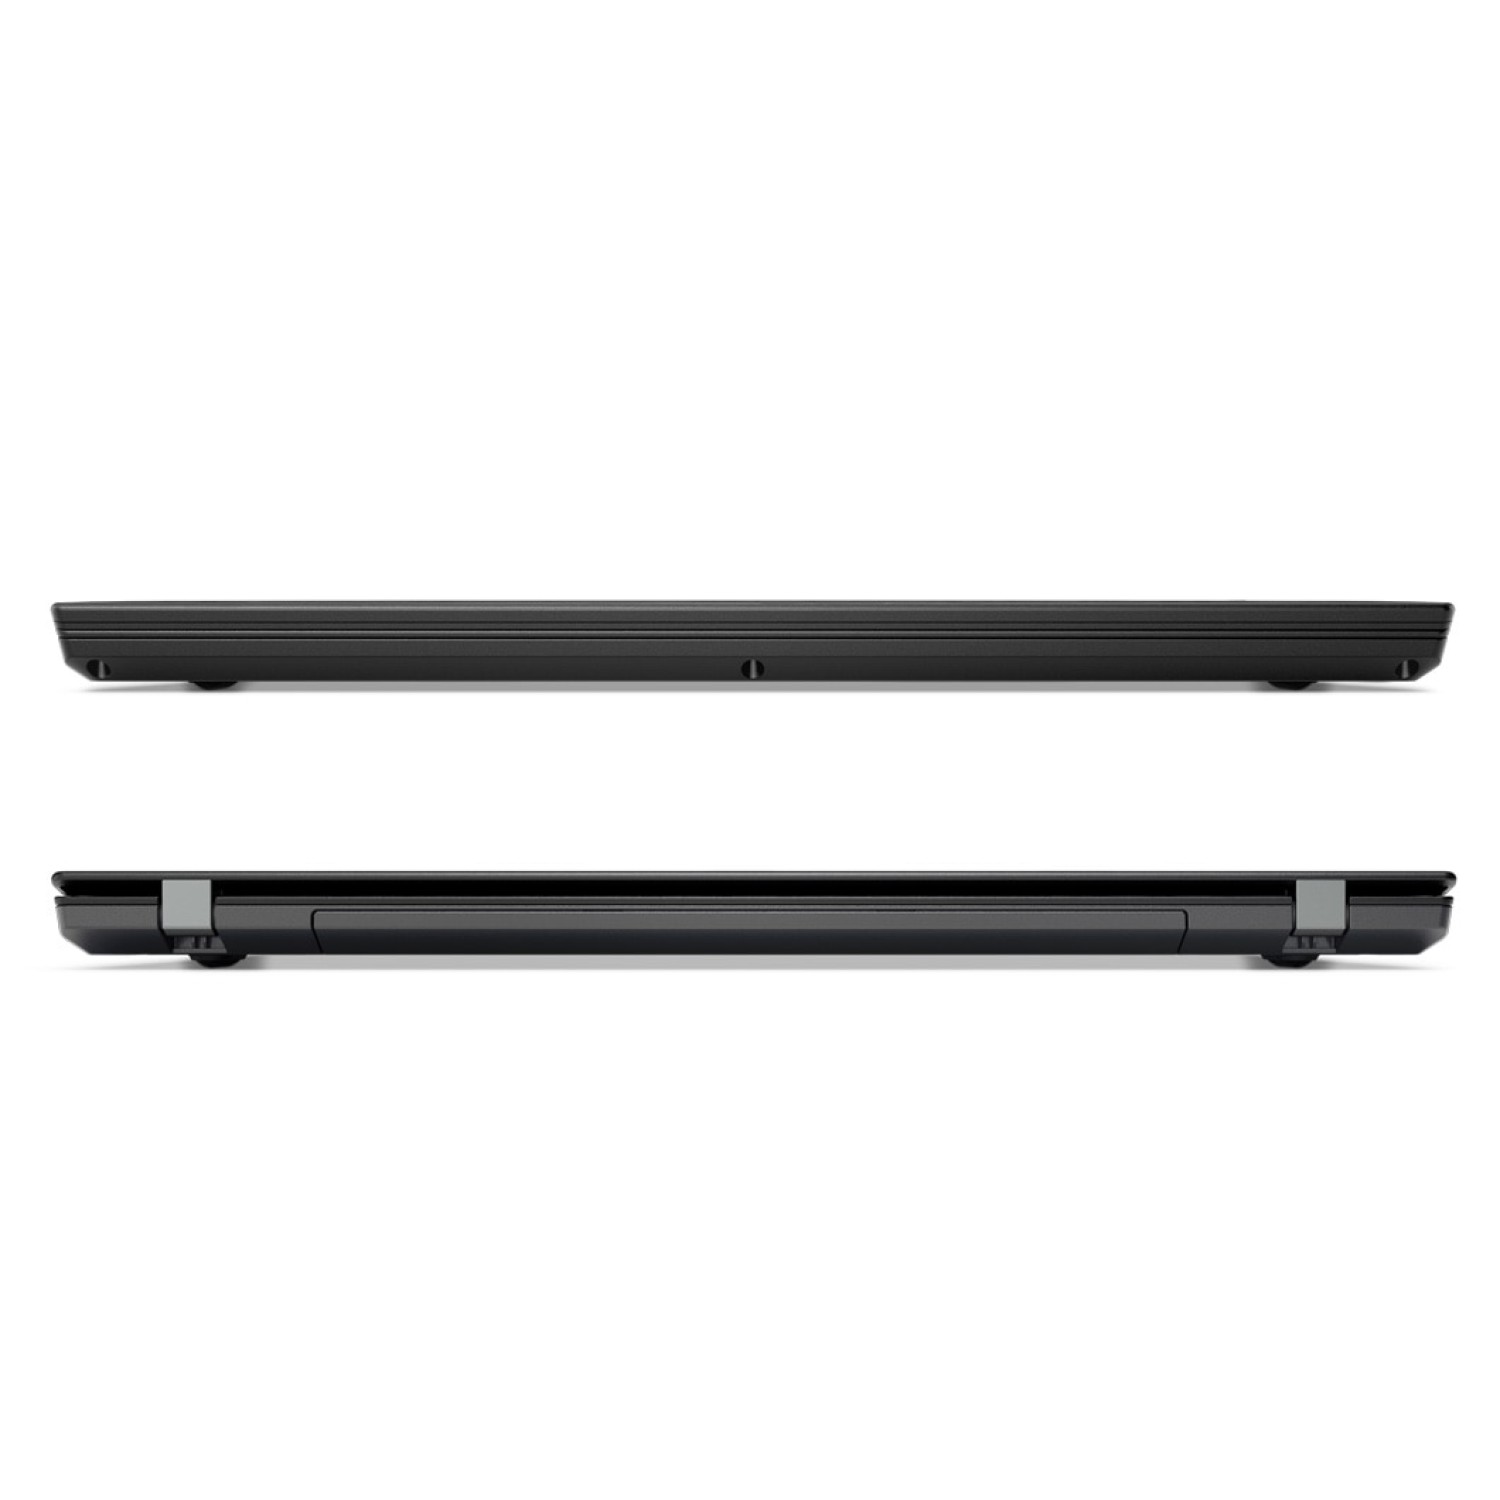 Lenovo ThinkPad T470, i5-7300u (RFB)